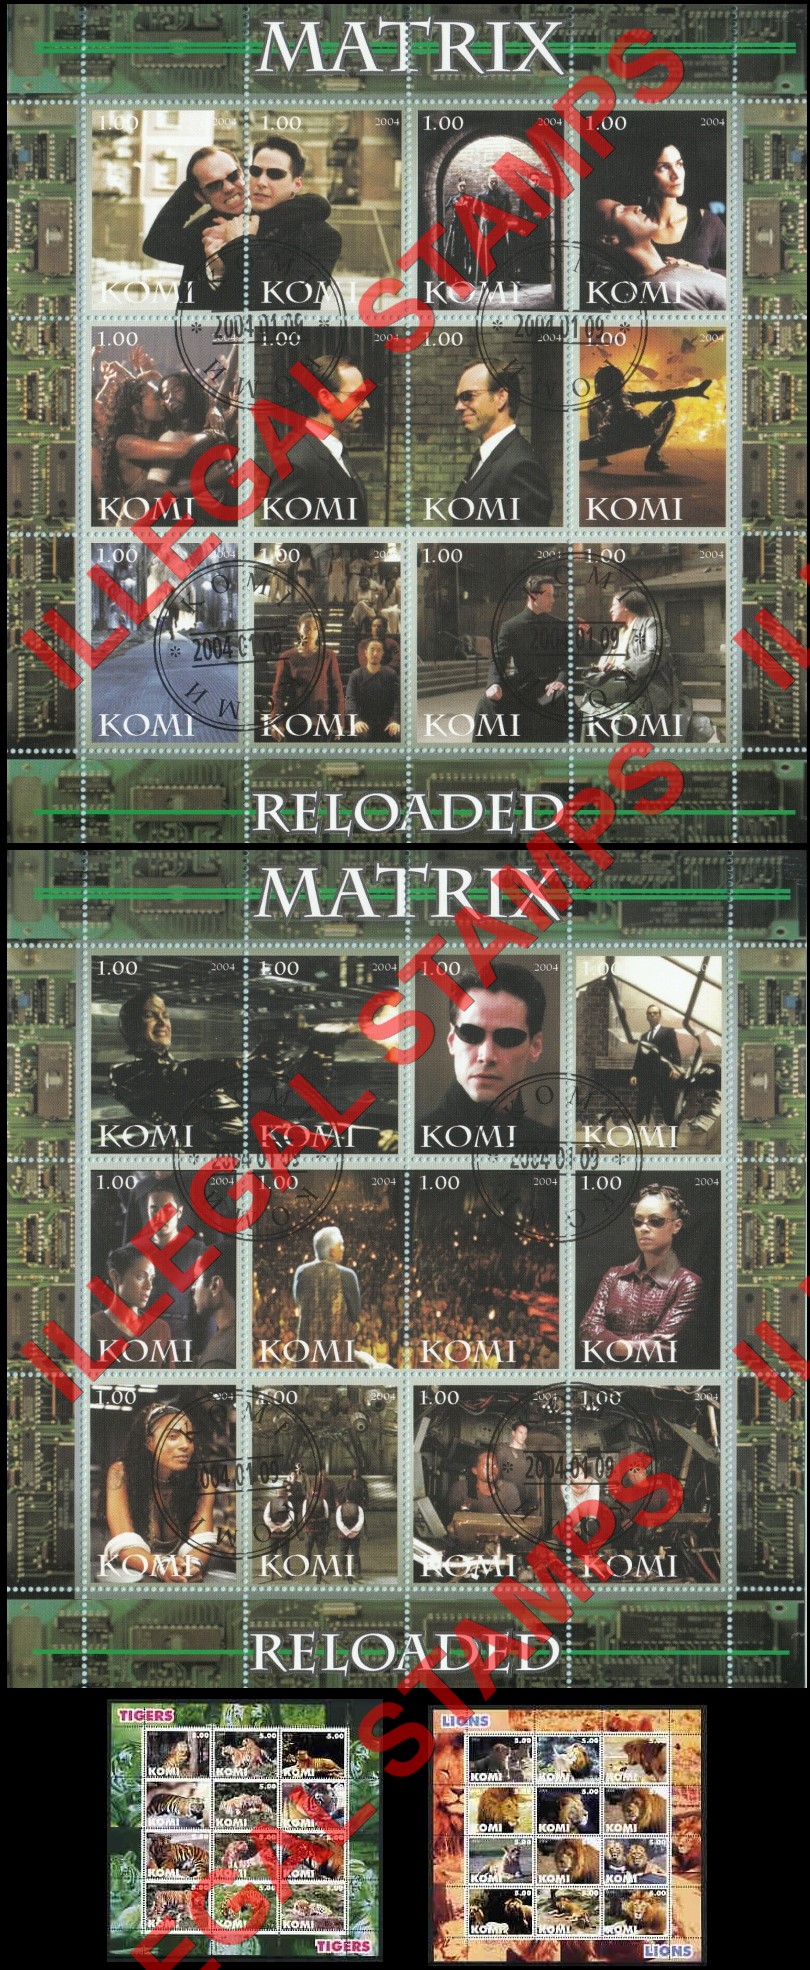 Komi Republic 2004 Counterfeit Illegal Stamps (Part 1)